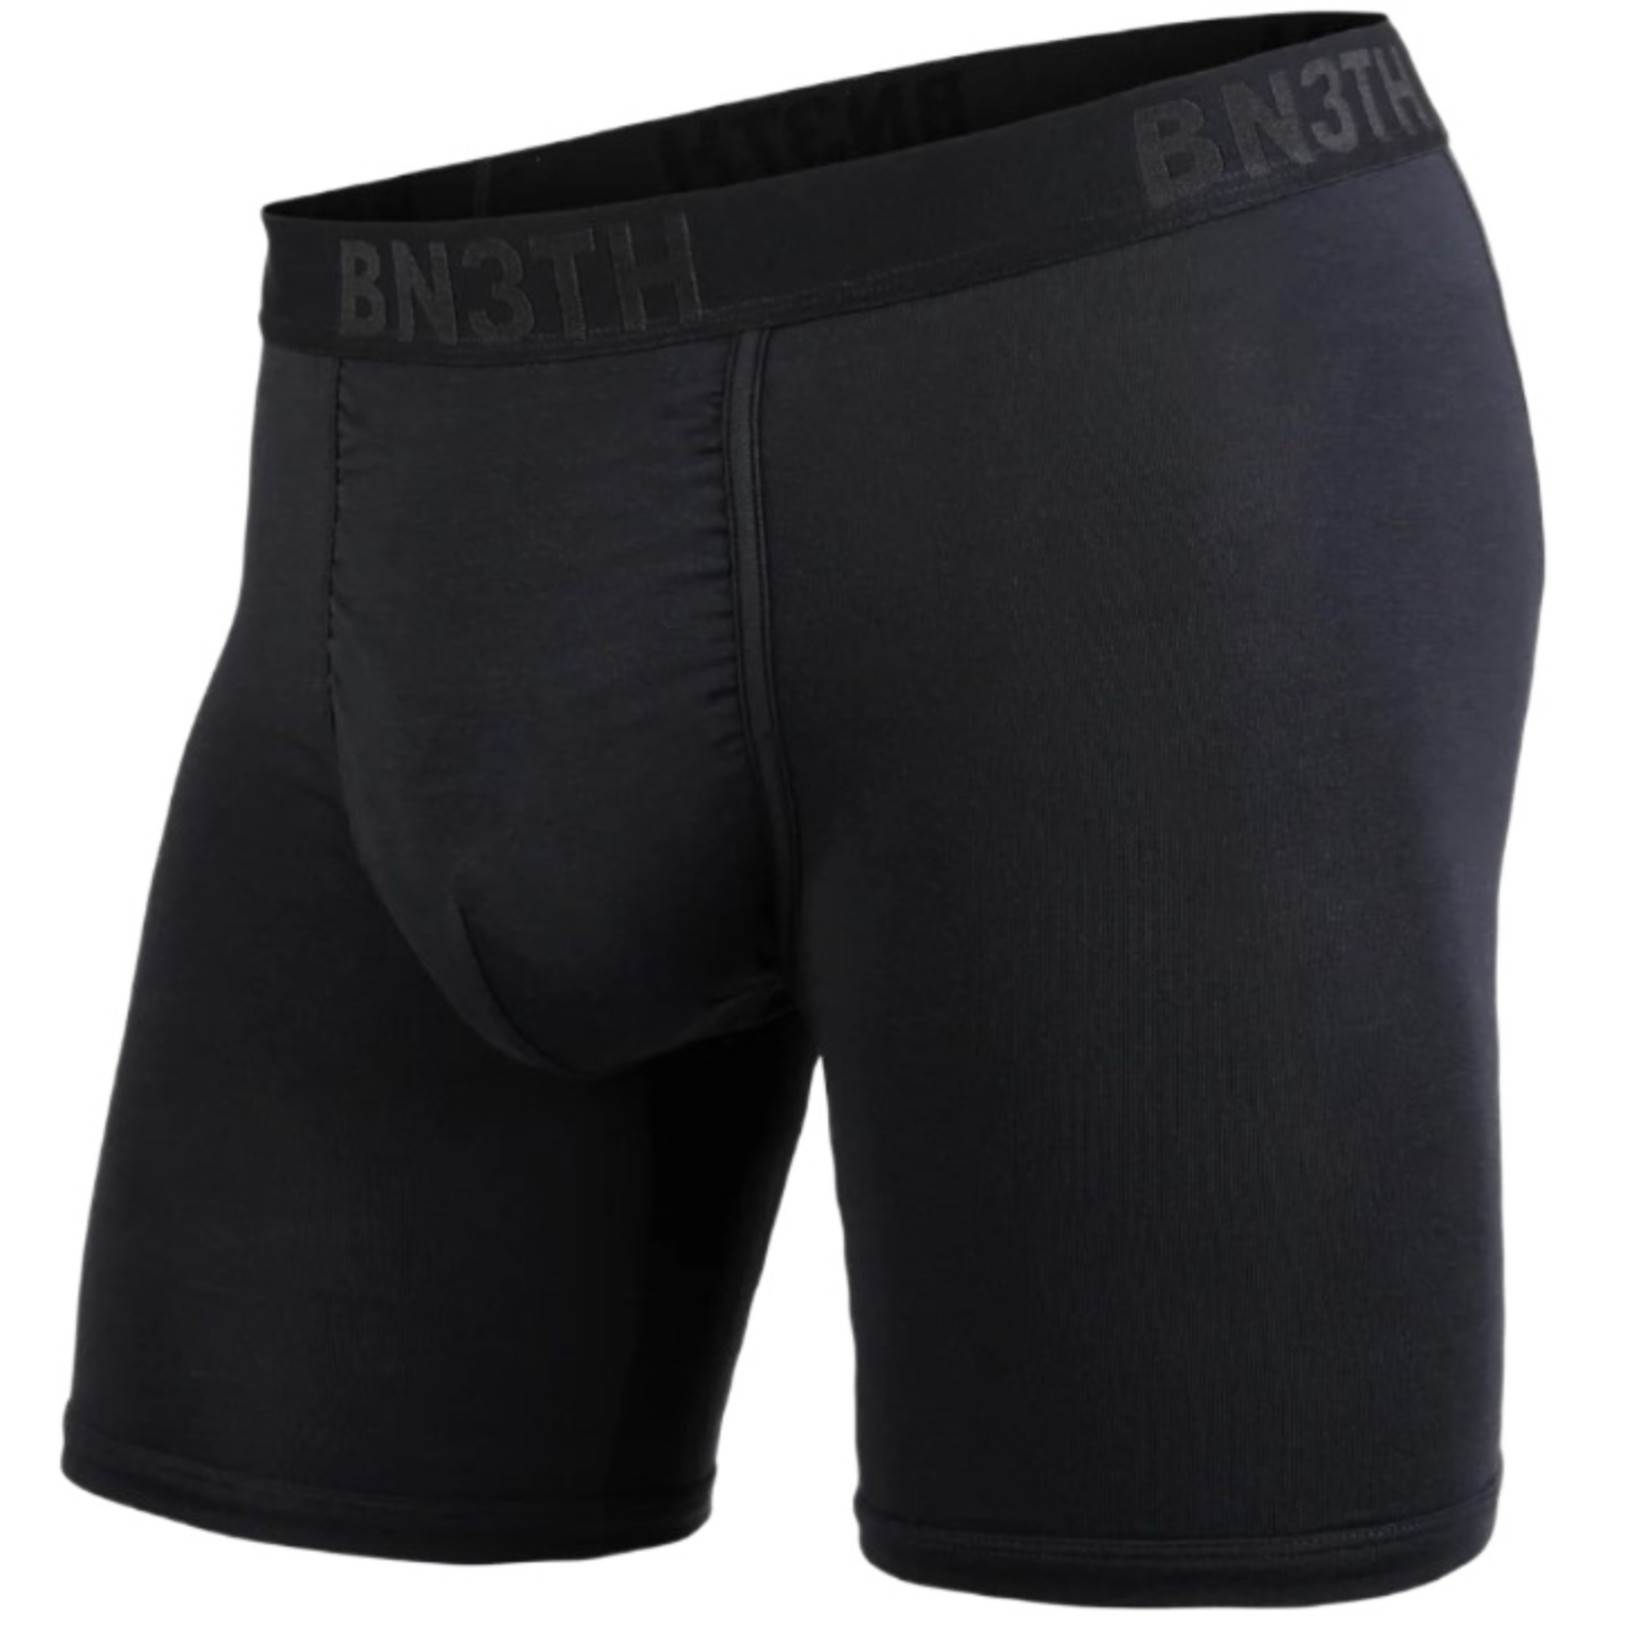 BN3TH Classic Ltd Edition 3 Pack 6.5 Modal Boxer Brief Underwear NEW Mens  S M L